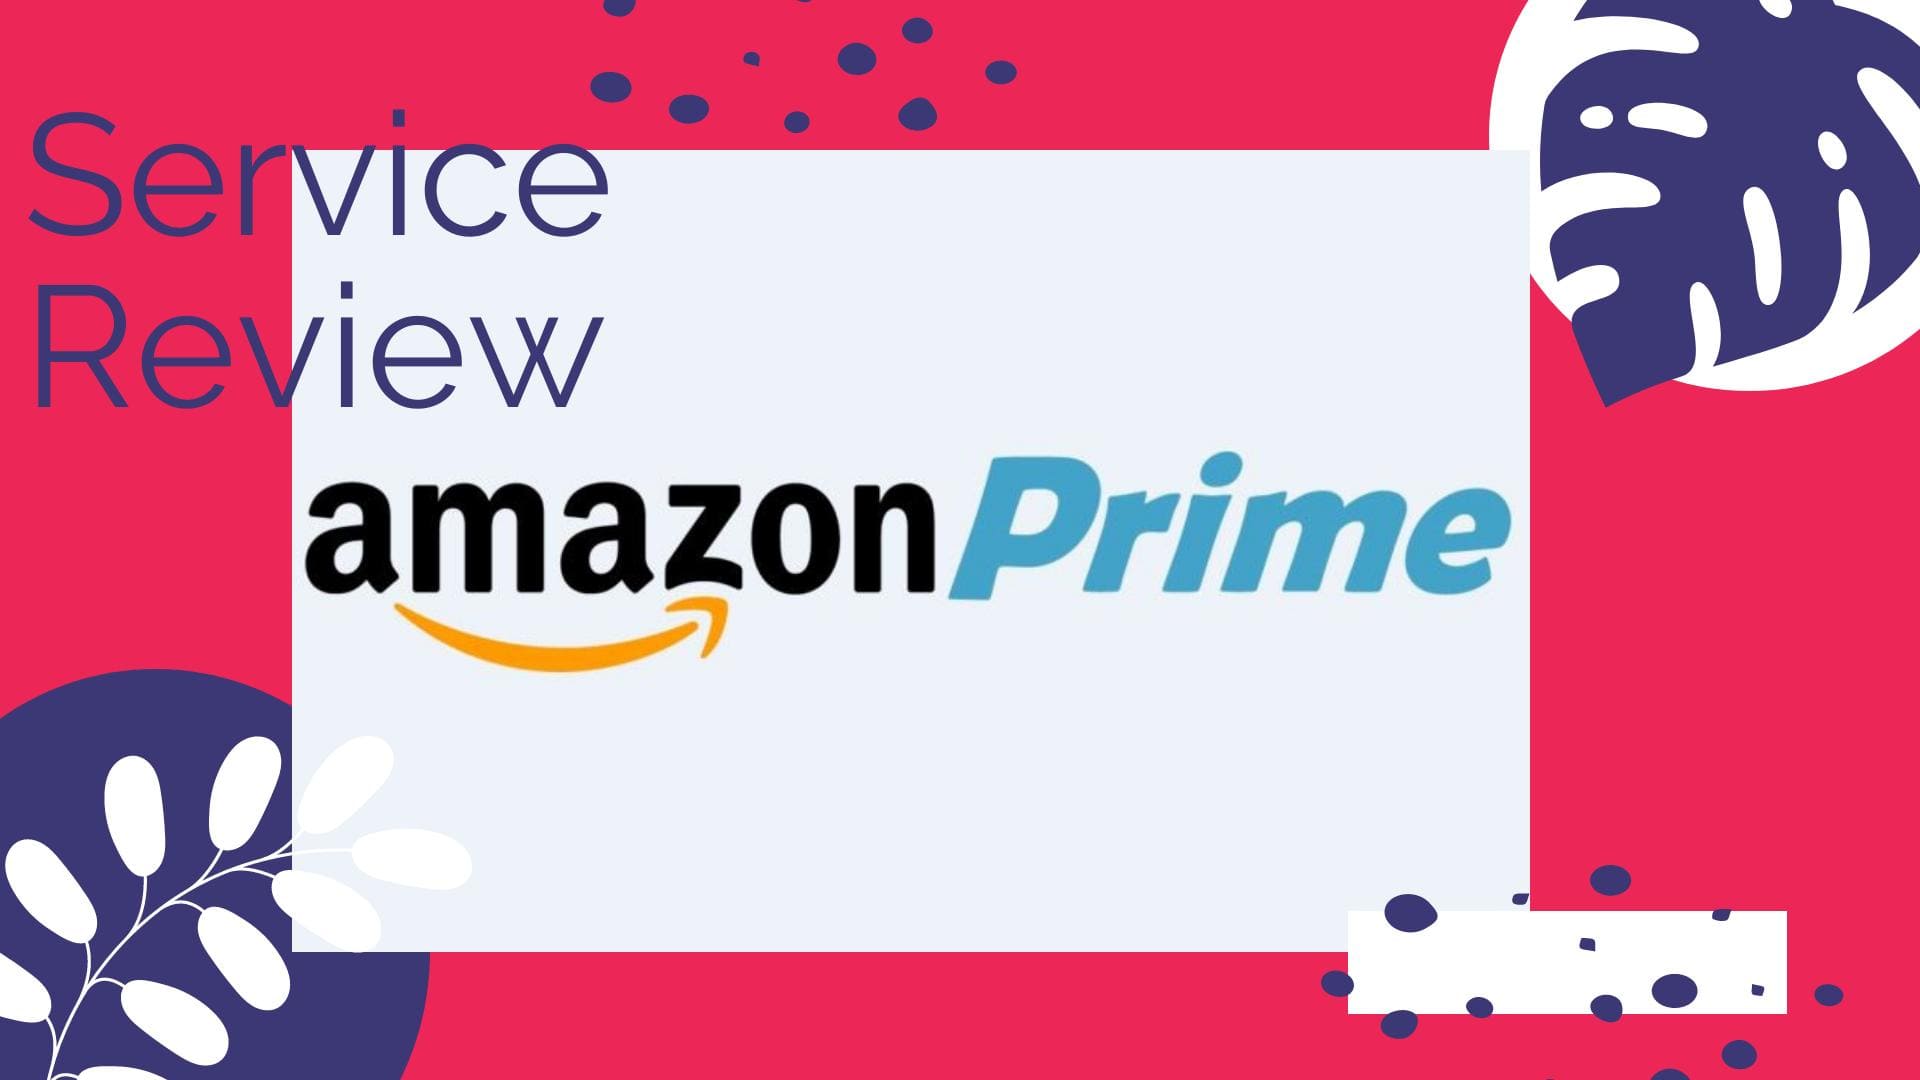 Peak View Marketing - Amazon Prime Review